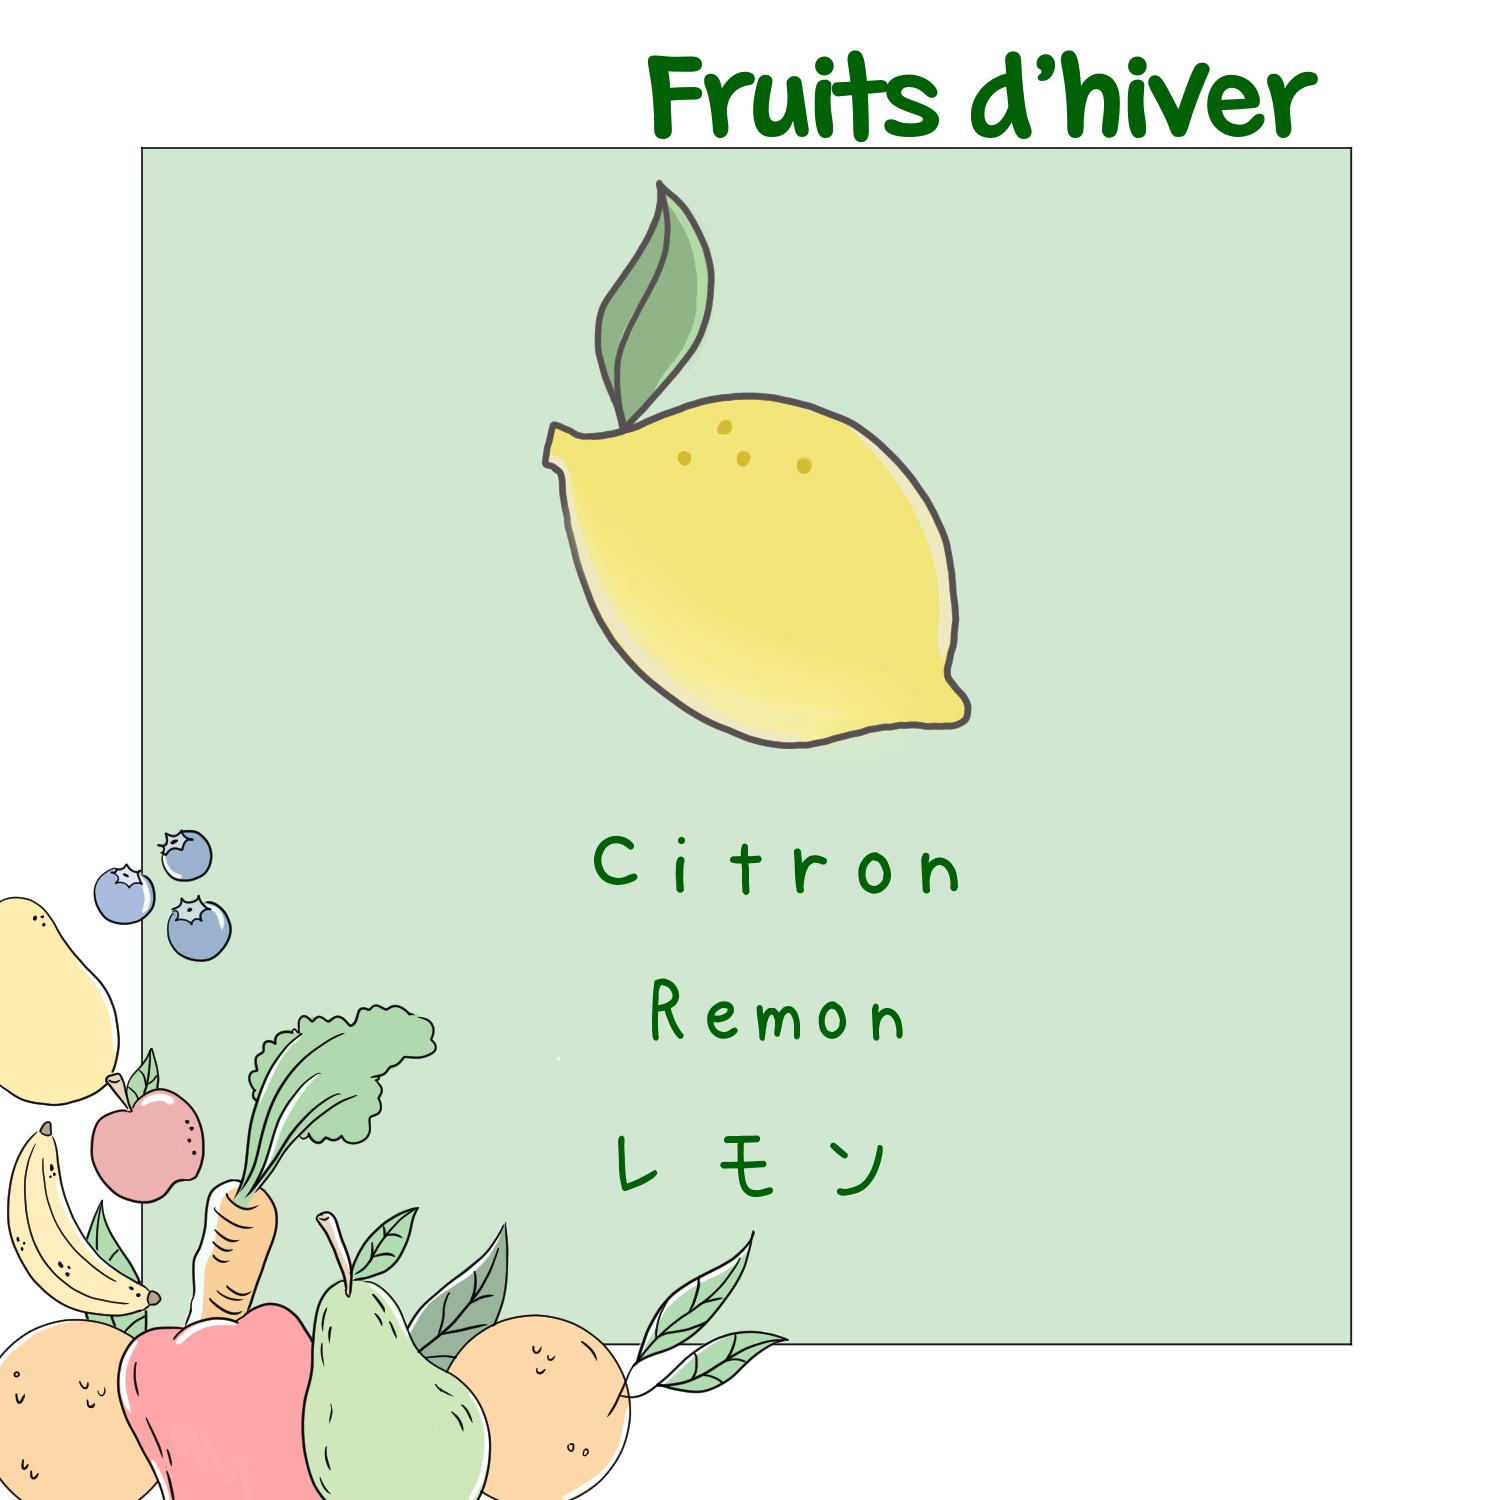 2) Citron